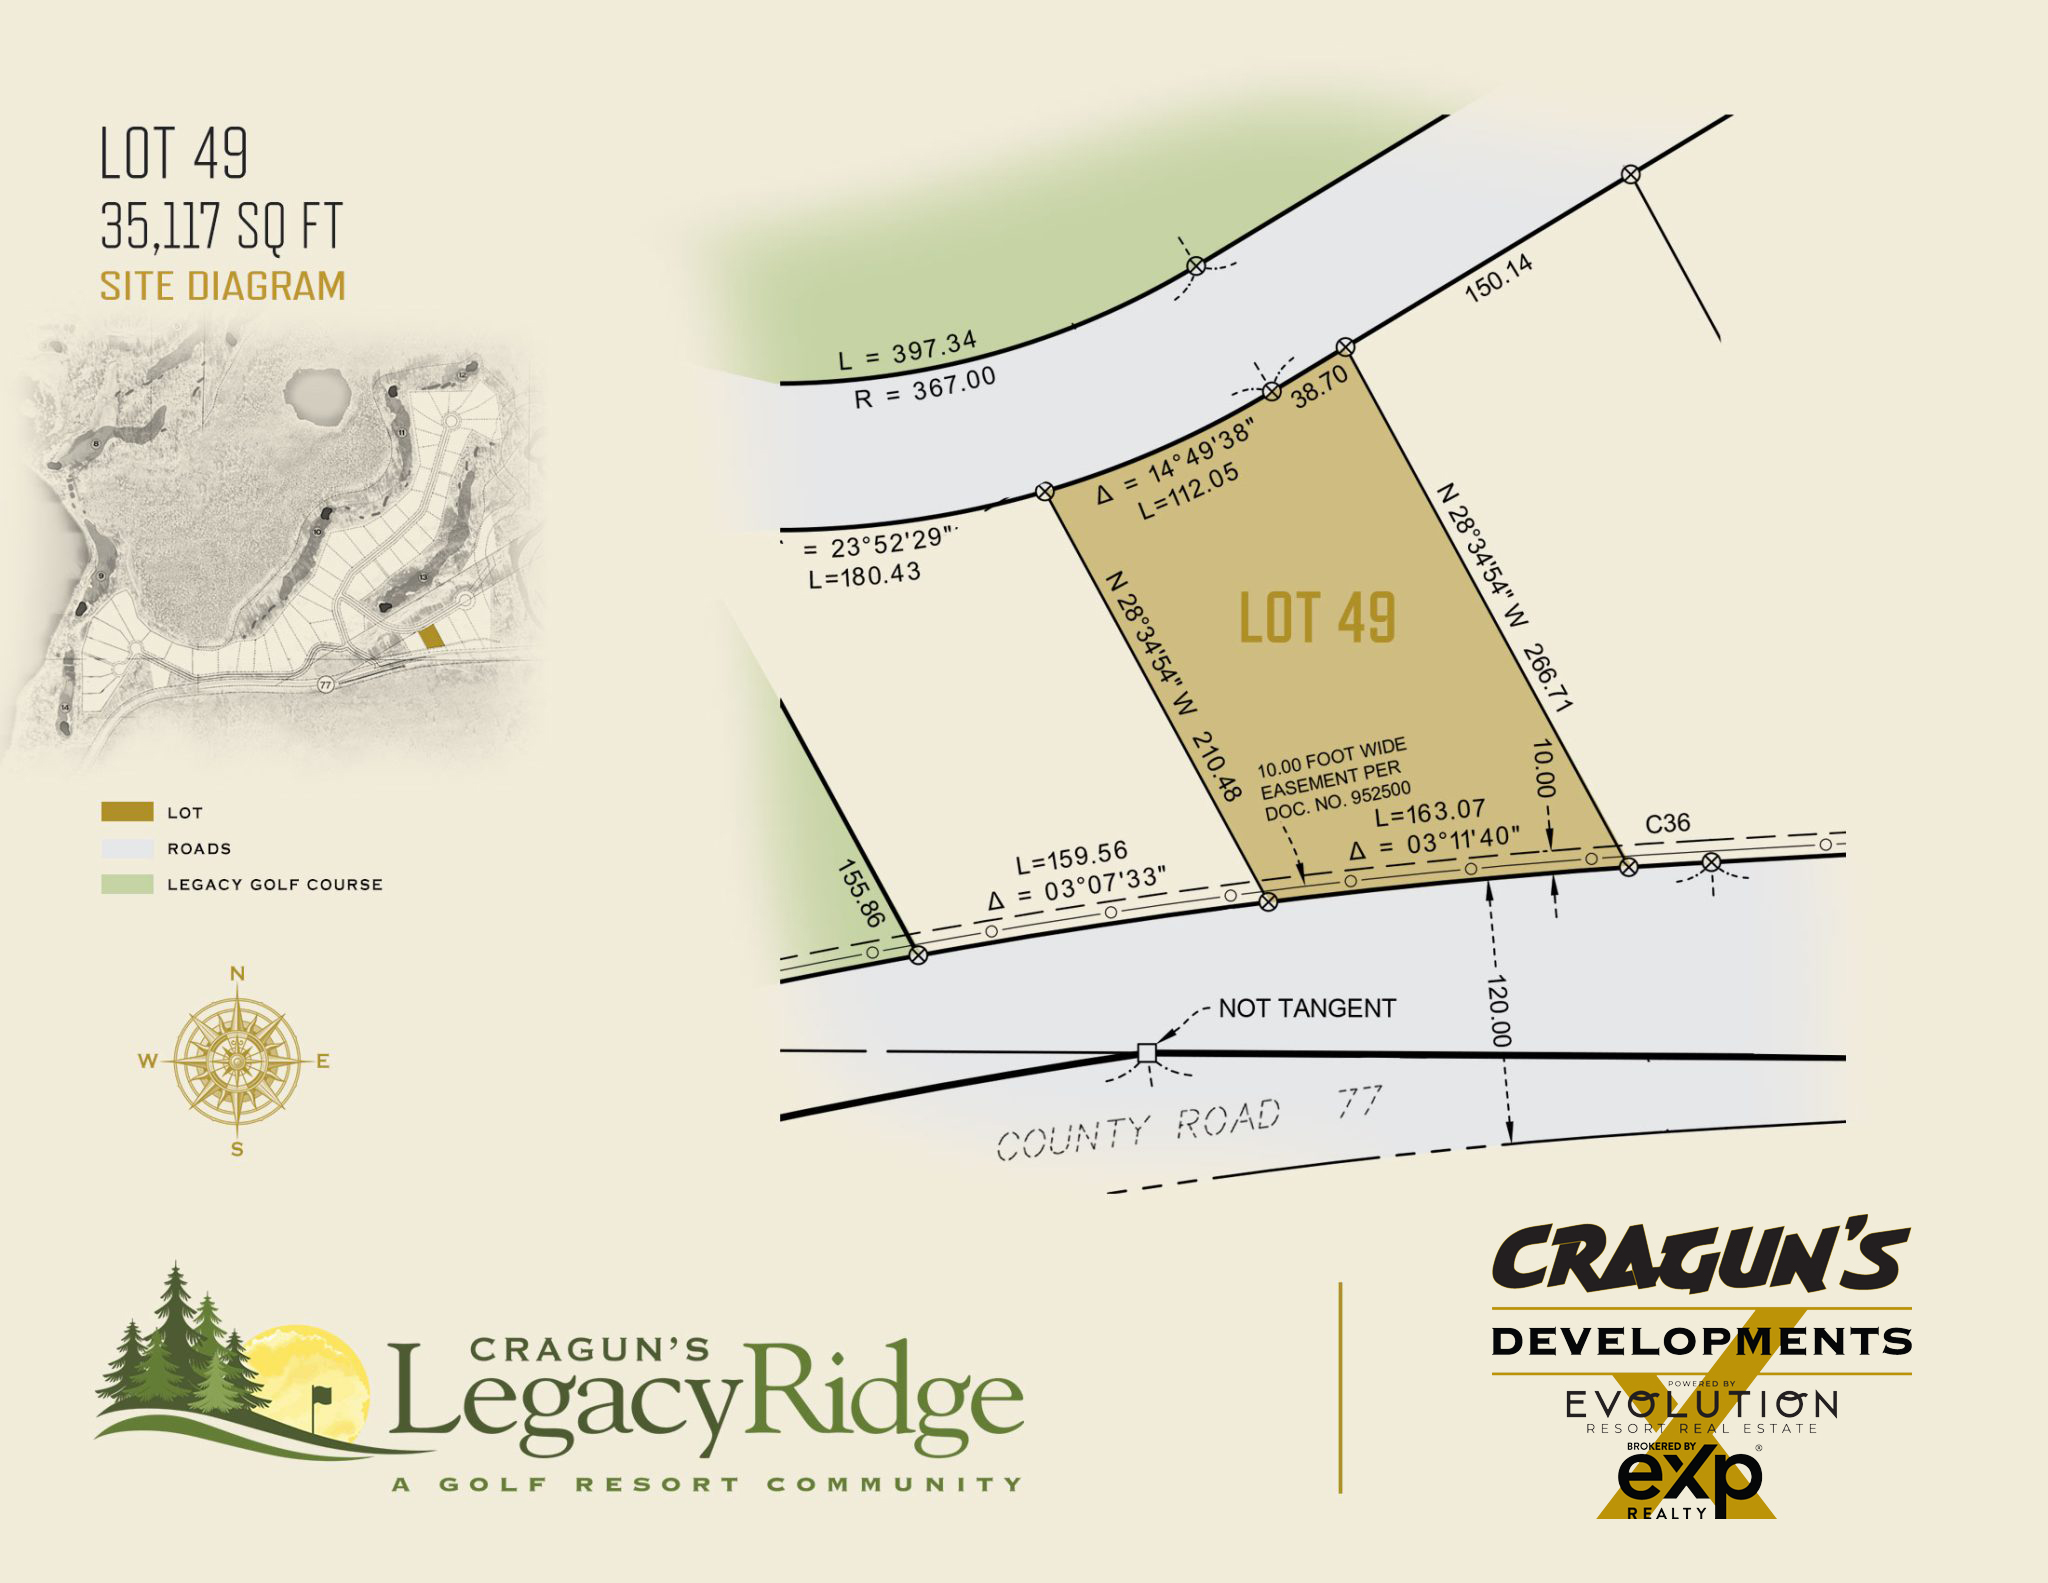 Legacy Ridge Lot 49 at Cragun's Developments in Brainerd, MN